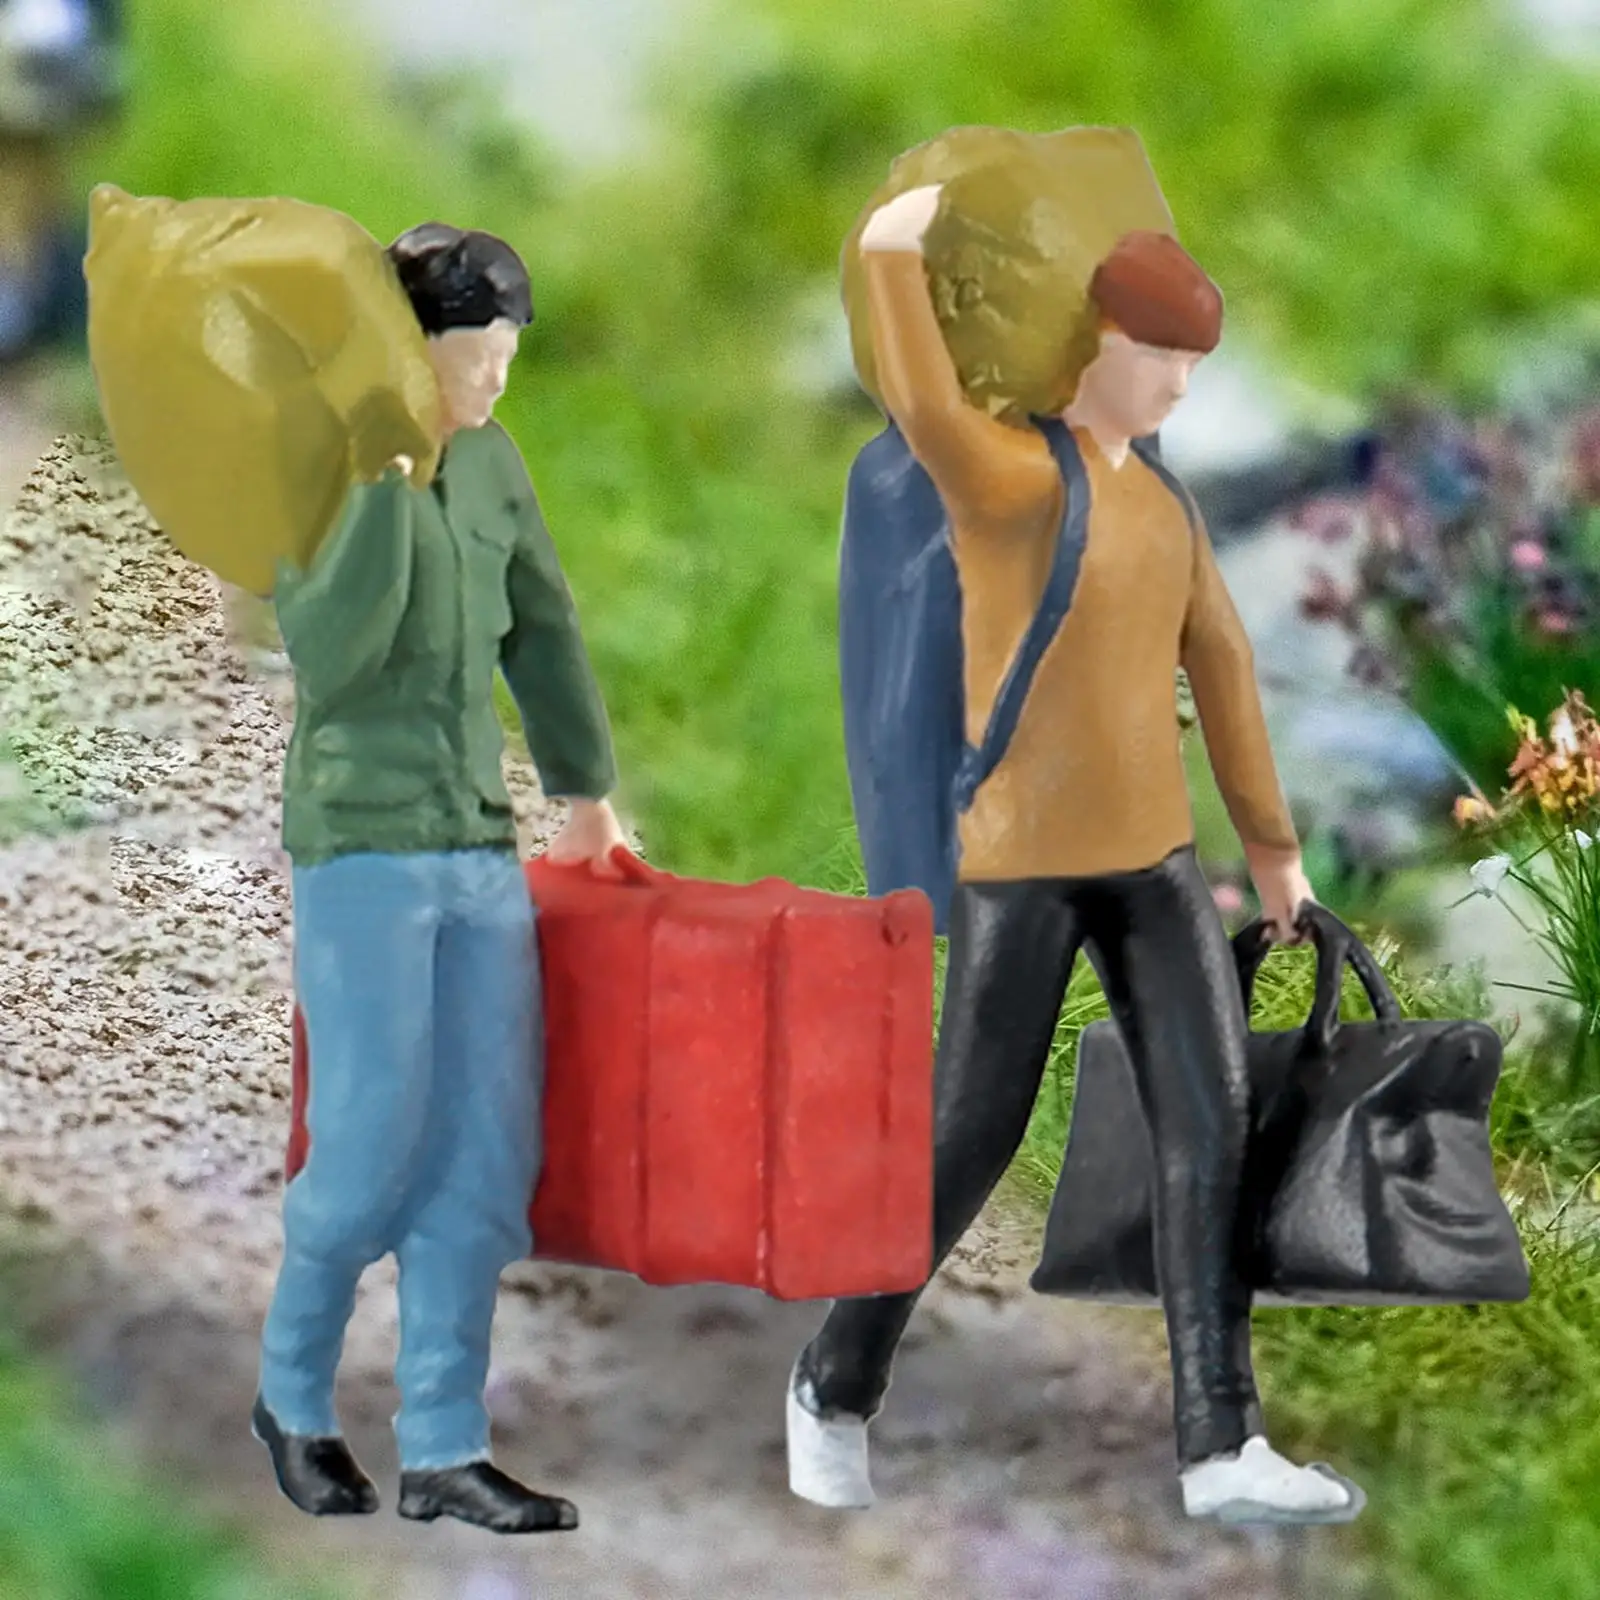 1/64 Model People Figures Simulation Figurines Resin Figures for DIY Projects Accessory Dollhouse Decor Miniature Scenes Decor